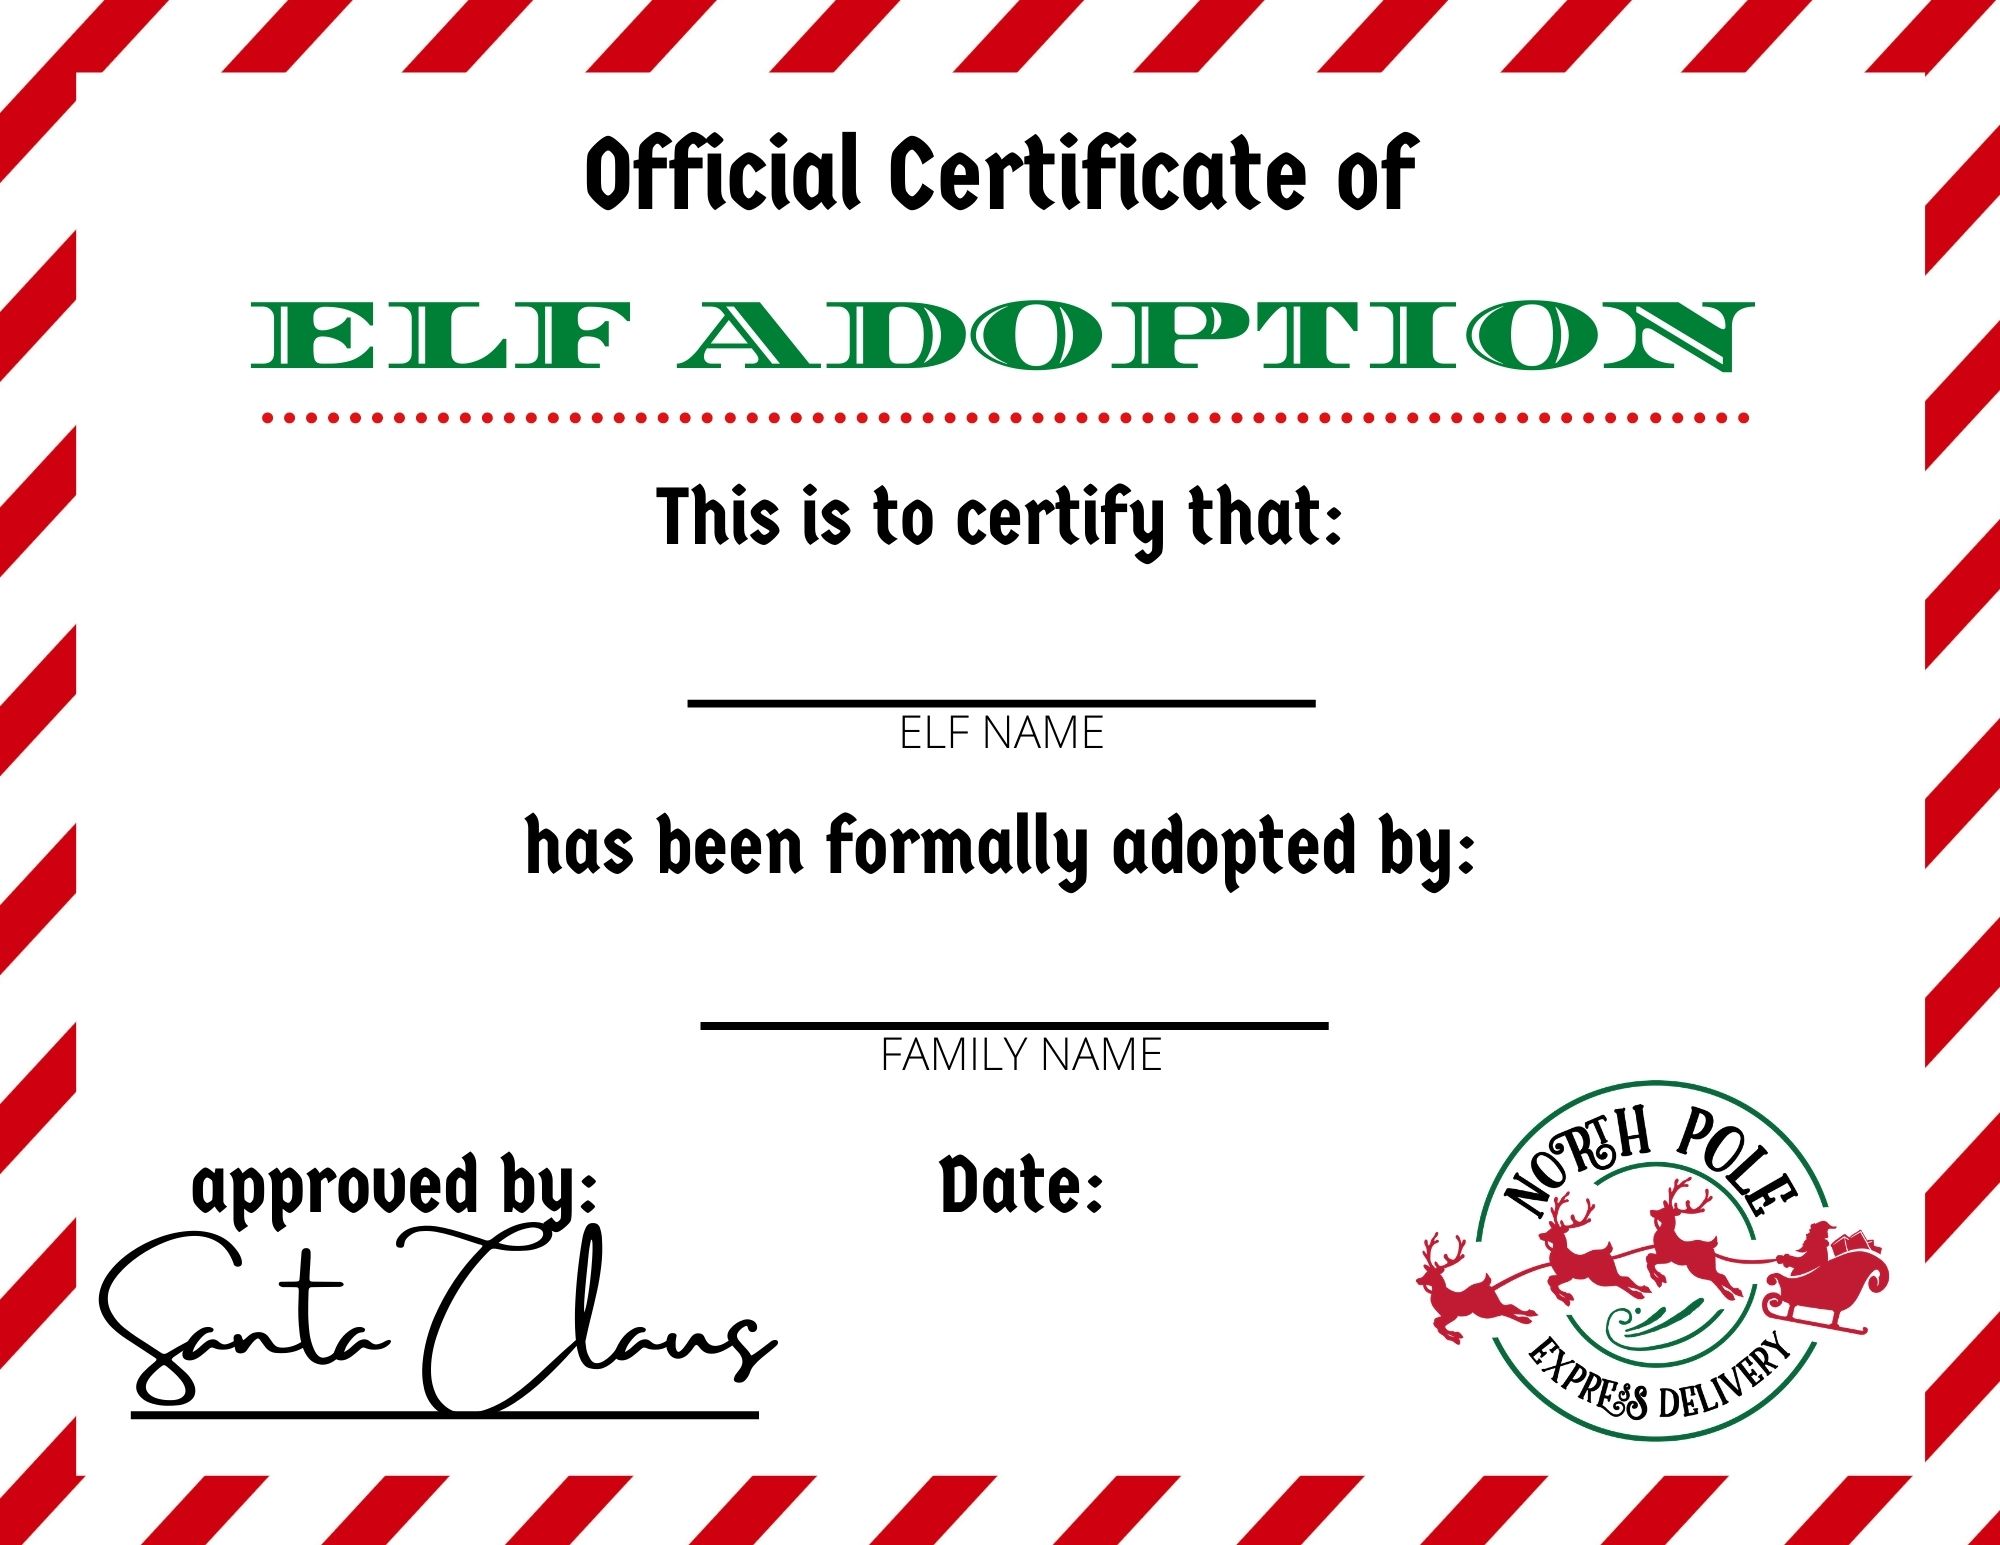 elf-adoption-certificate-free-elf-on-the-shelf-printables-natural